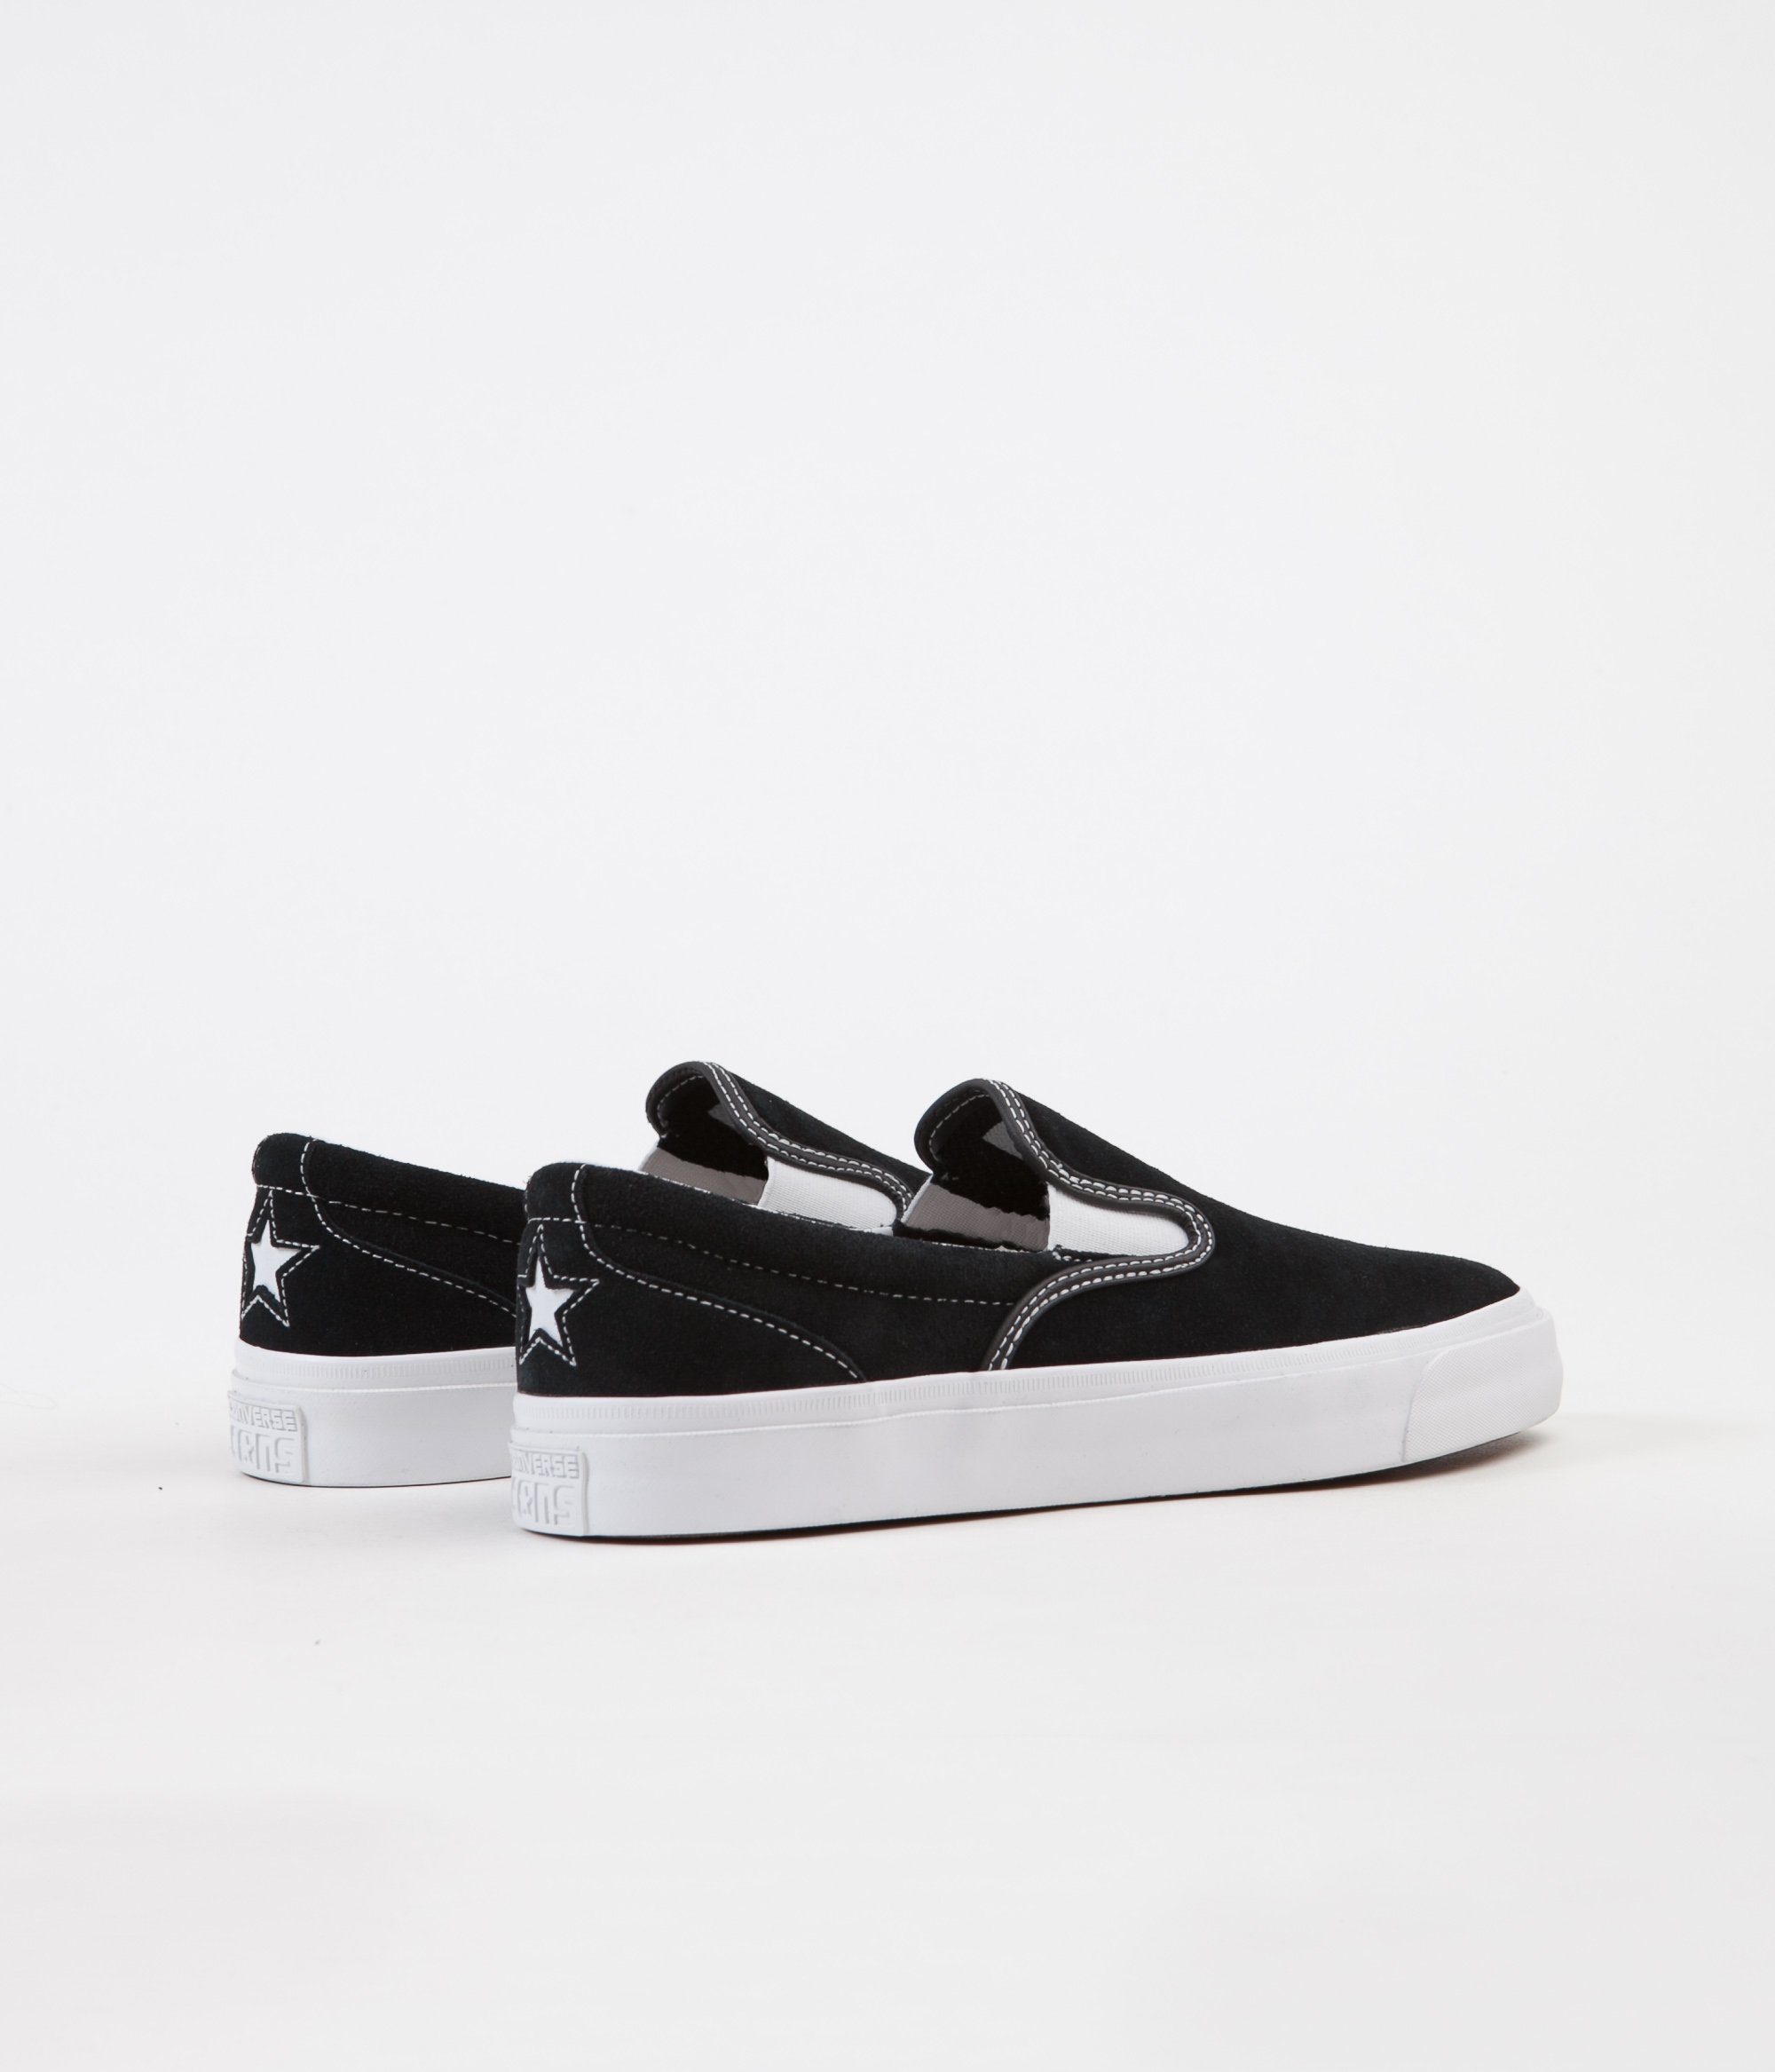 Very Goods | Converse One Star CC Slip On Shoes - Black / White / White |  Flatspot